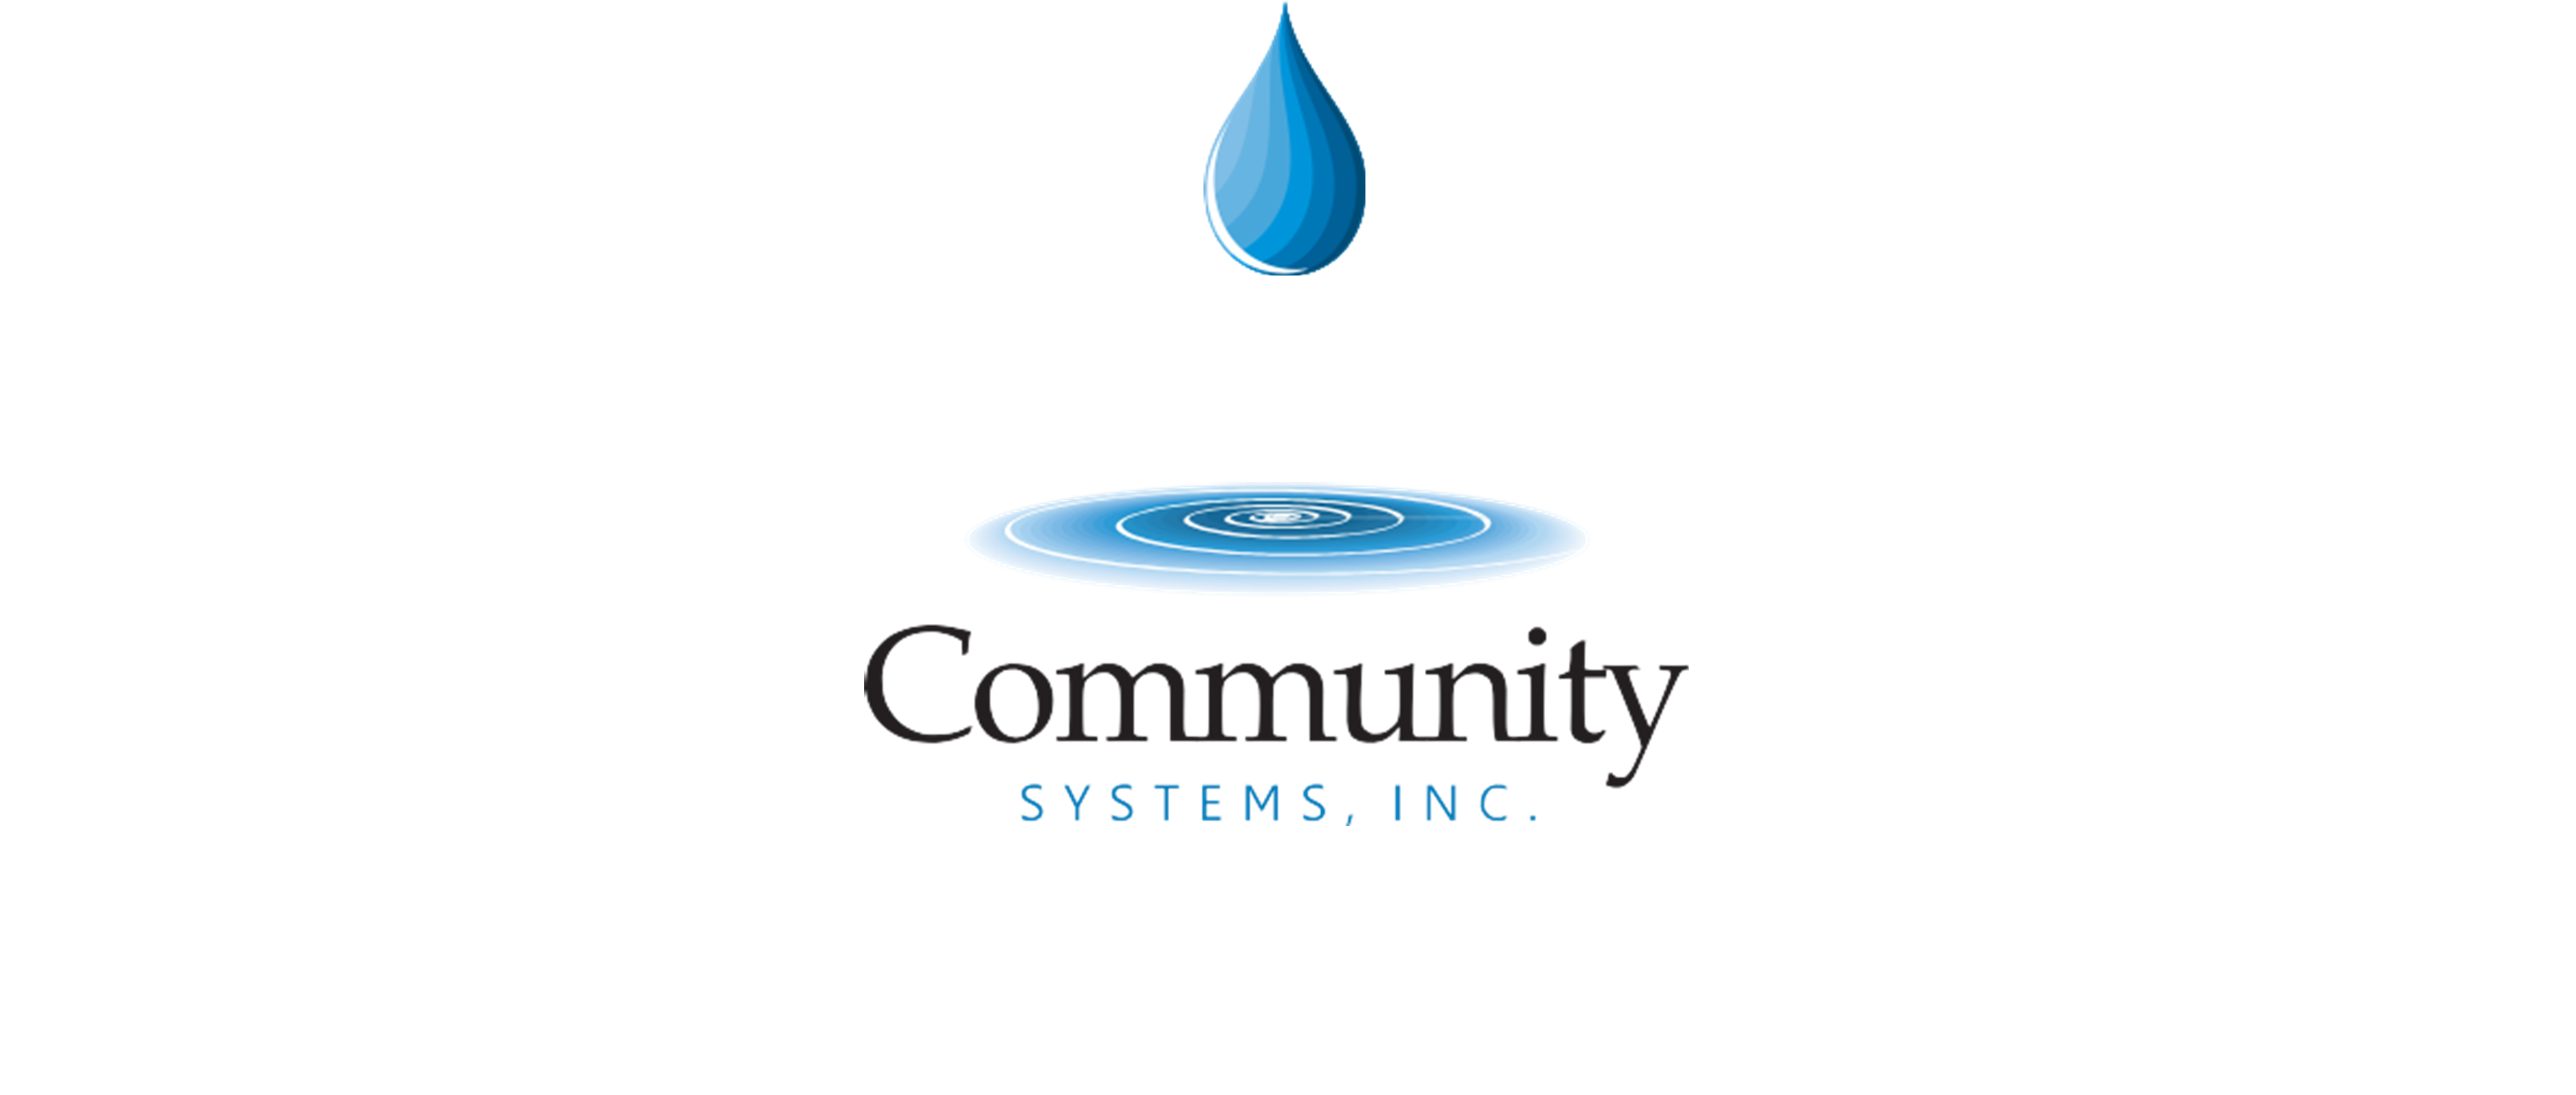 Community Systems Inc logo